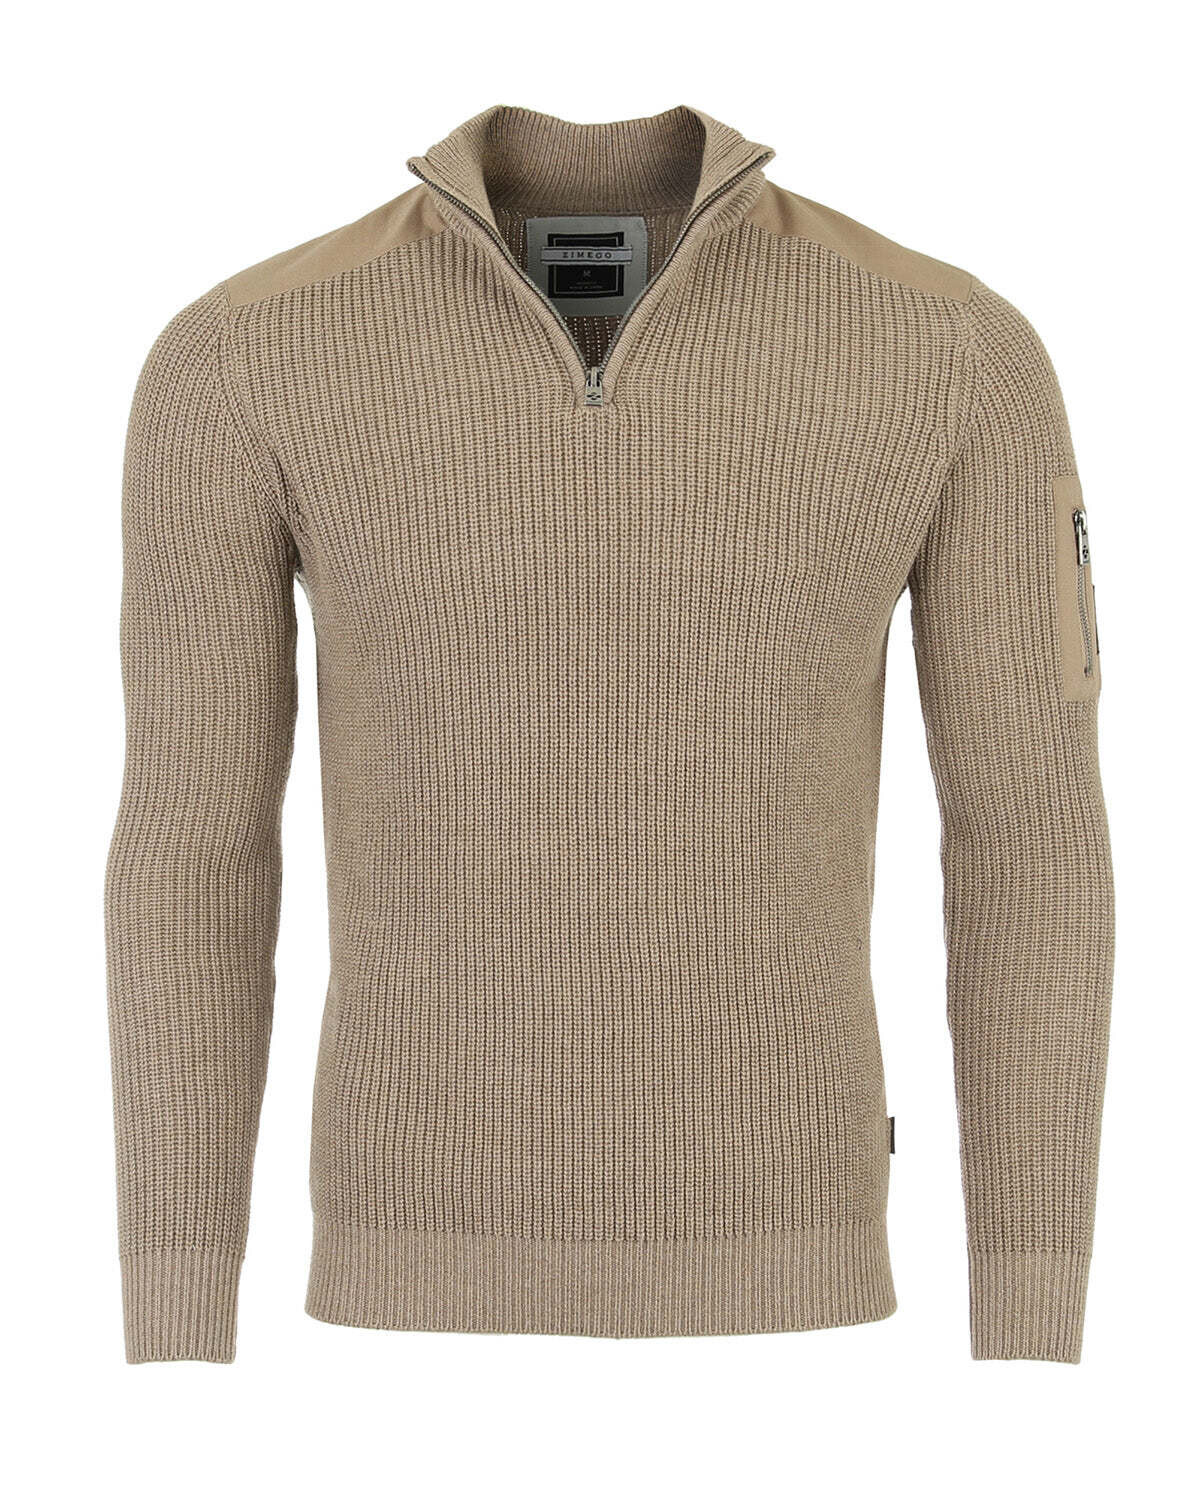 ZIMEGO Mens Long Sleeve Pullover Quarter Zip Mock Neck Polo Sweater